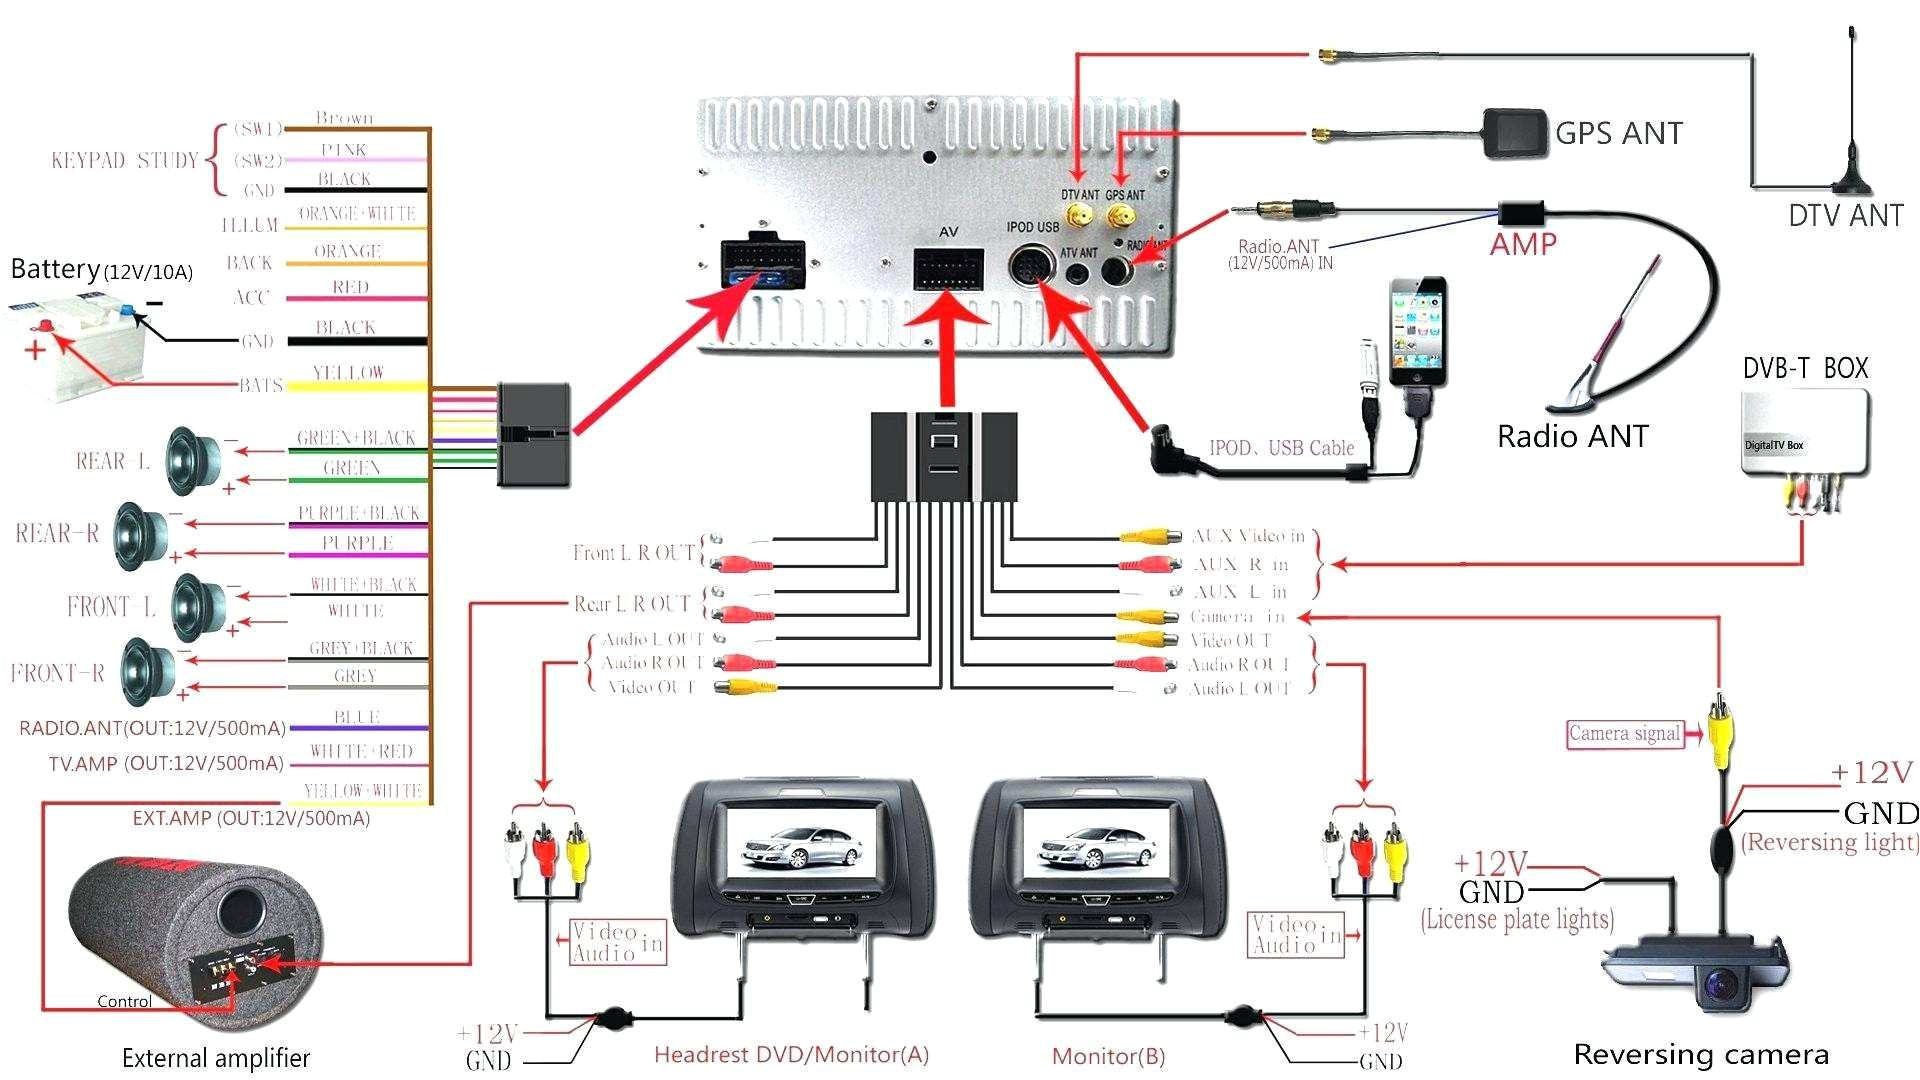 att wiring diagram wiring diagram img att u verse phone diagram wiring diagram expert at t broadband